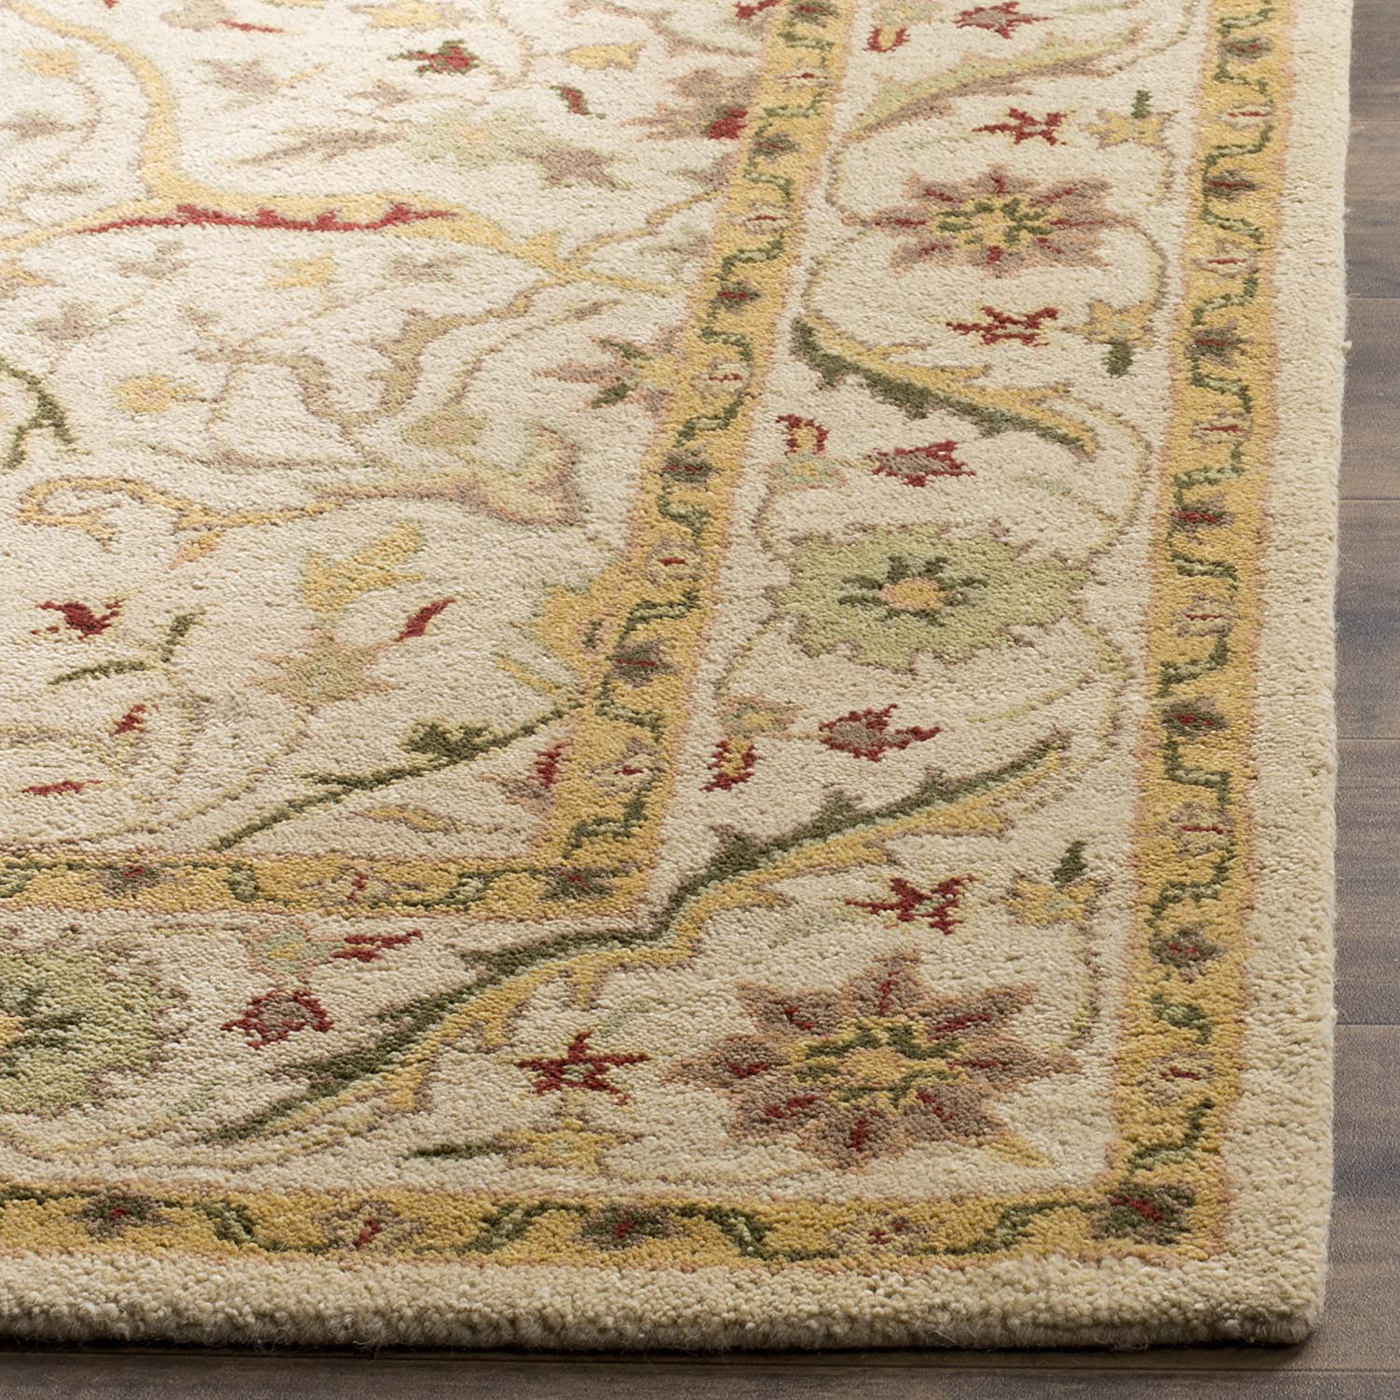 Safavieh Antiquity Collection AT14C Handmade Traditional Oriental Premium Wool Area Rug, 3'6" x 3'6" Round, Rust